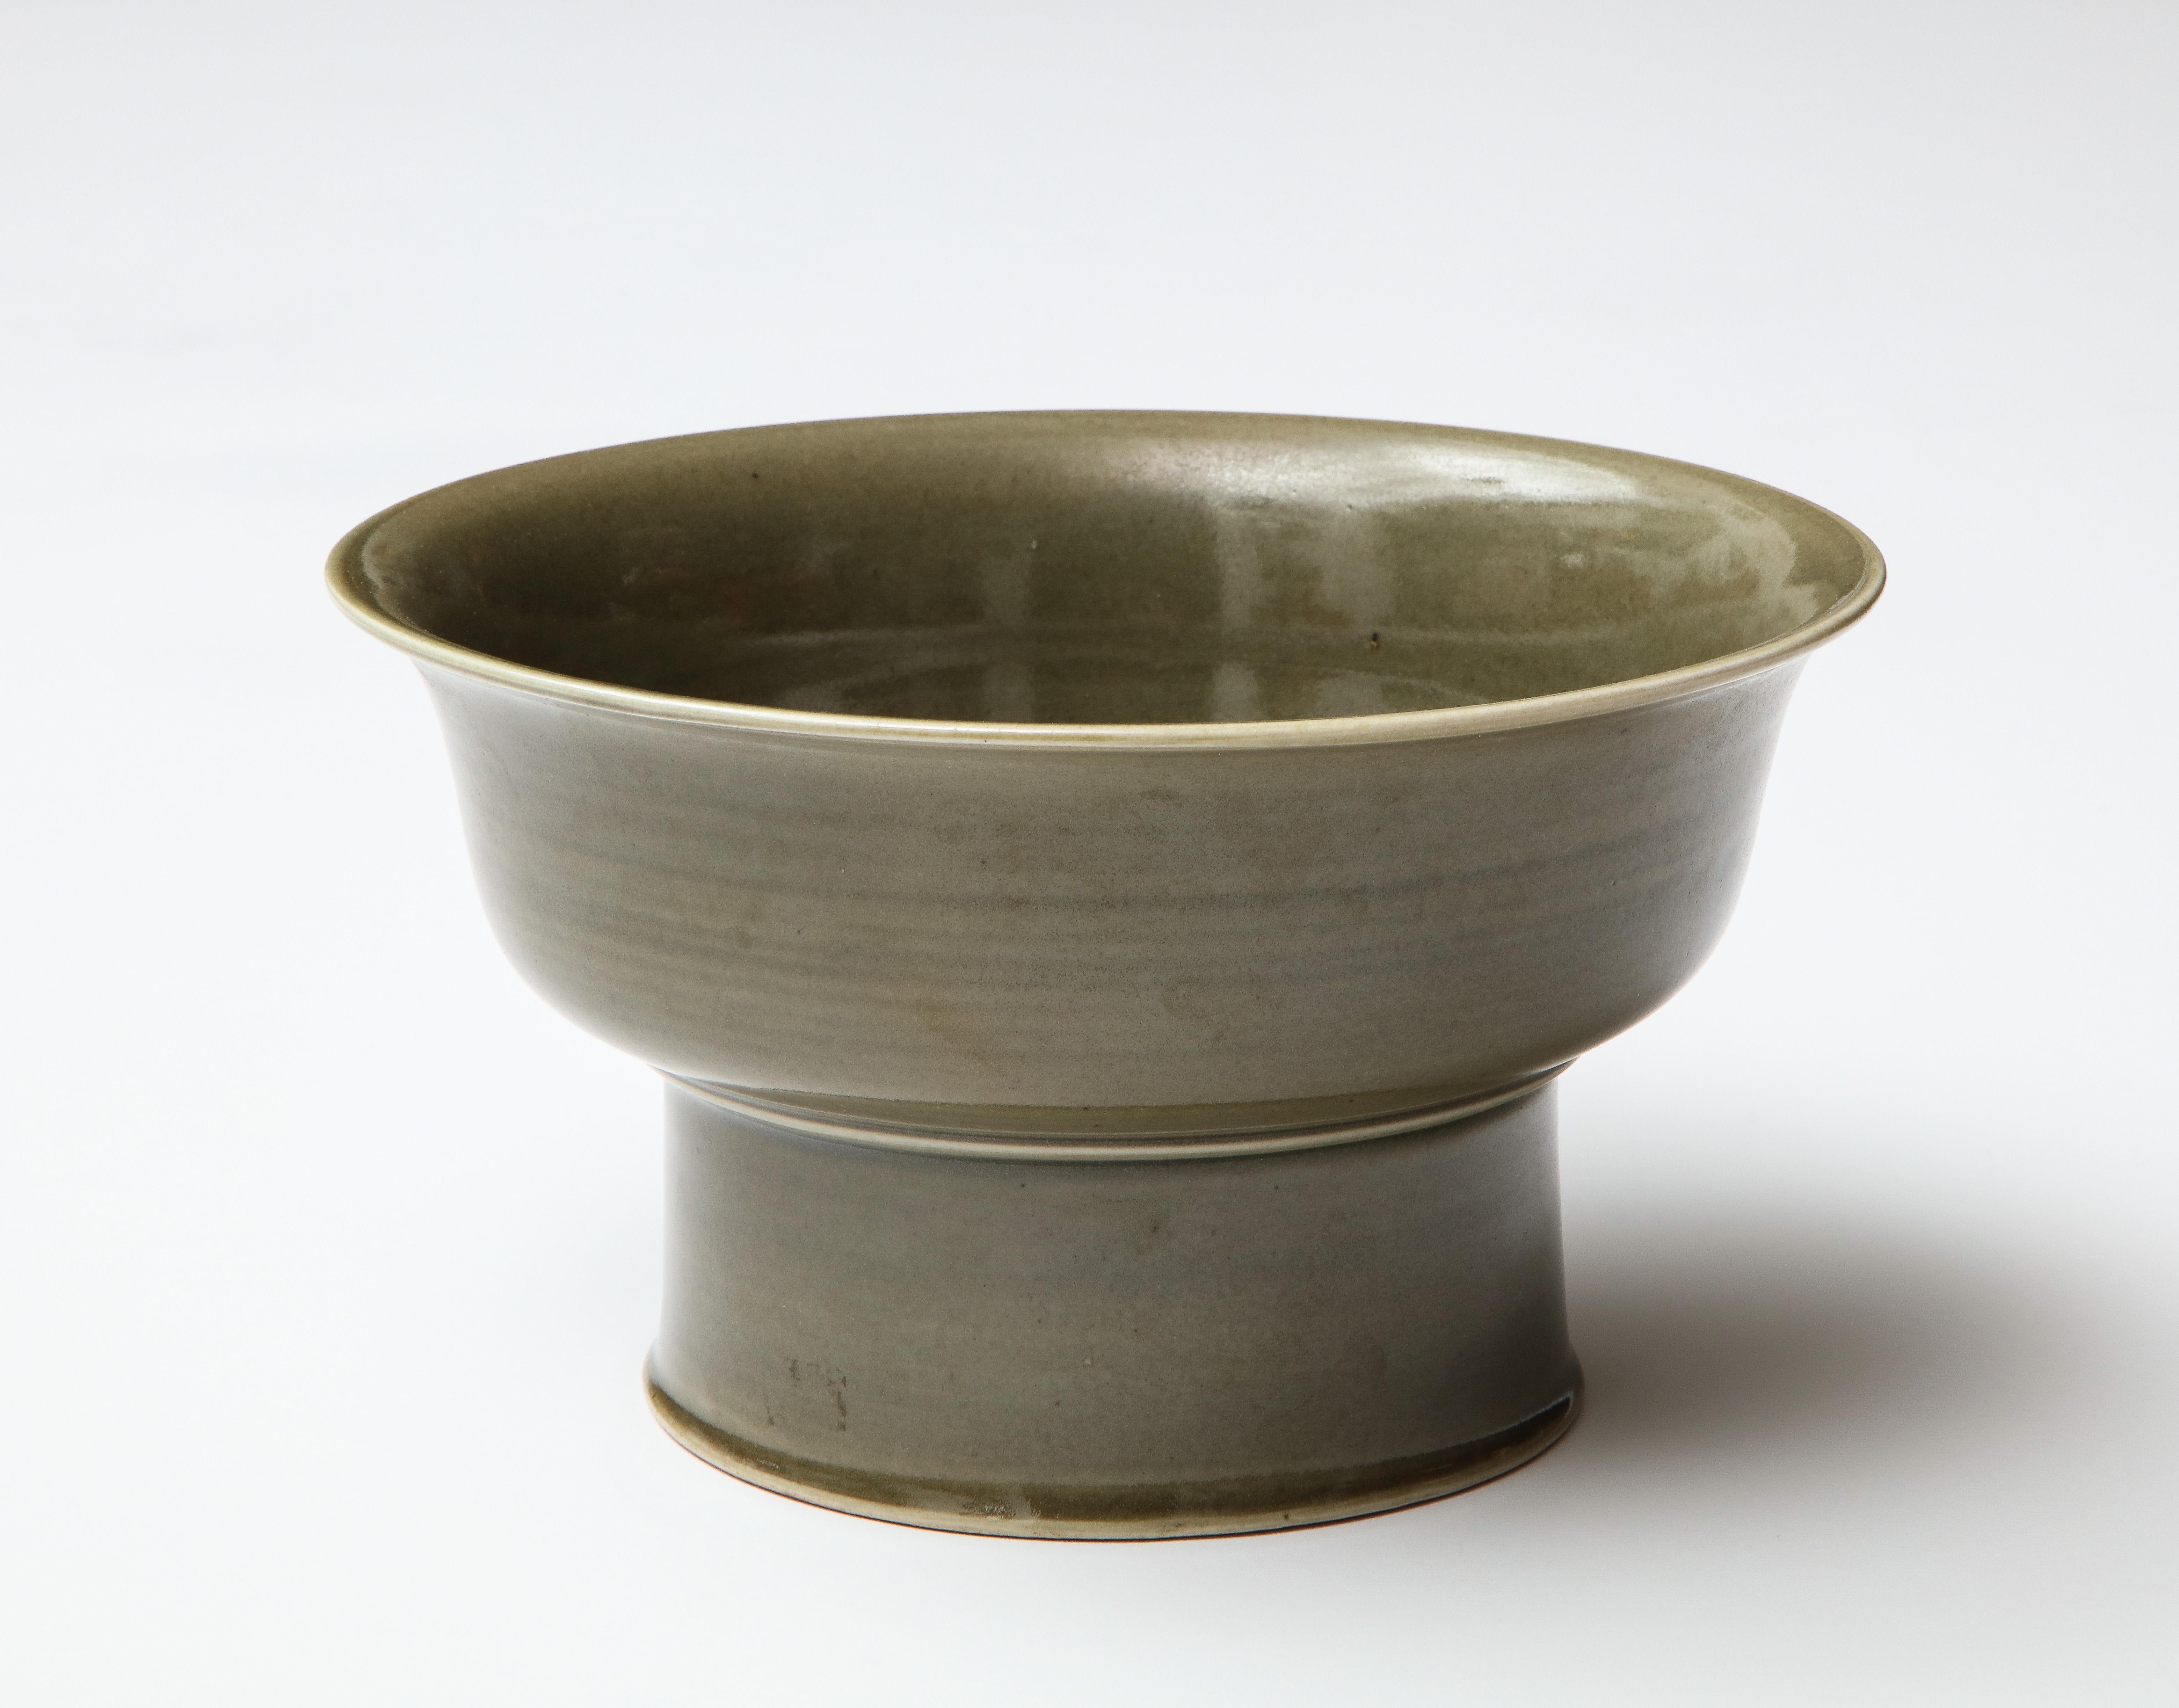 Antoine de Vinck, Belgian, b. 1924-1992
Celadon grey porcelain bowl, 1978, signed
Measures: Height 5.5, diameter 10.5 inches.
 